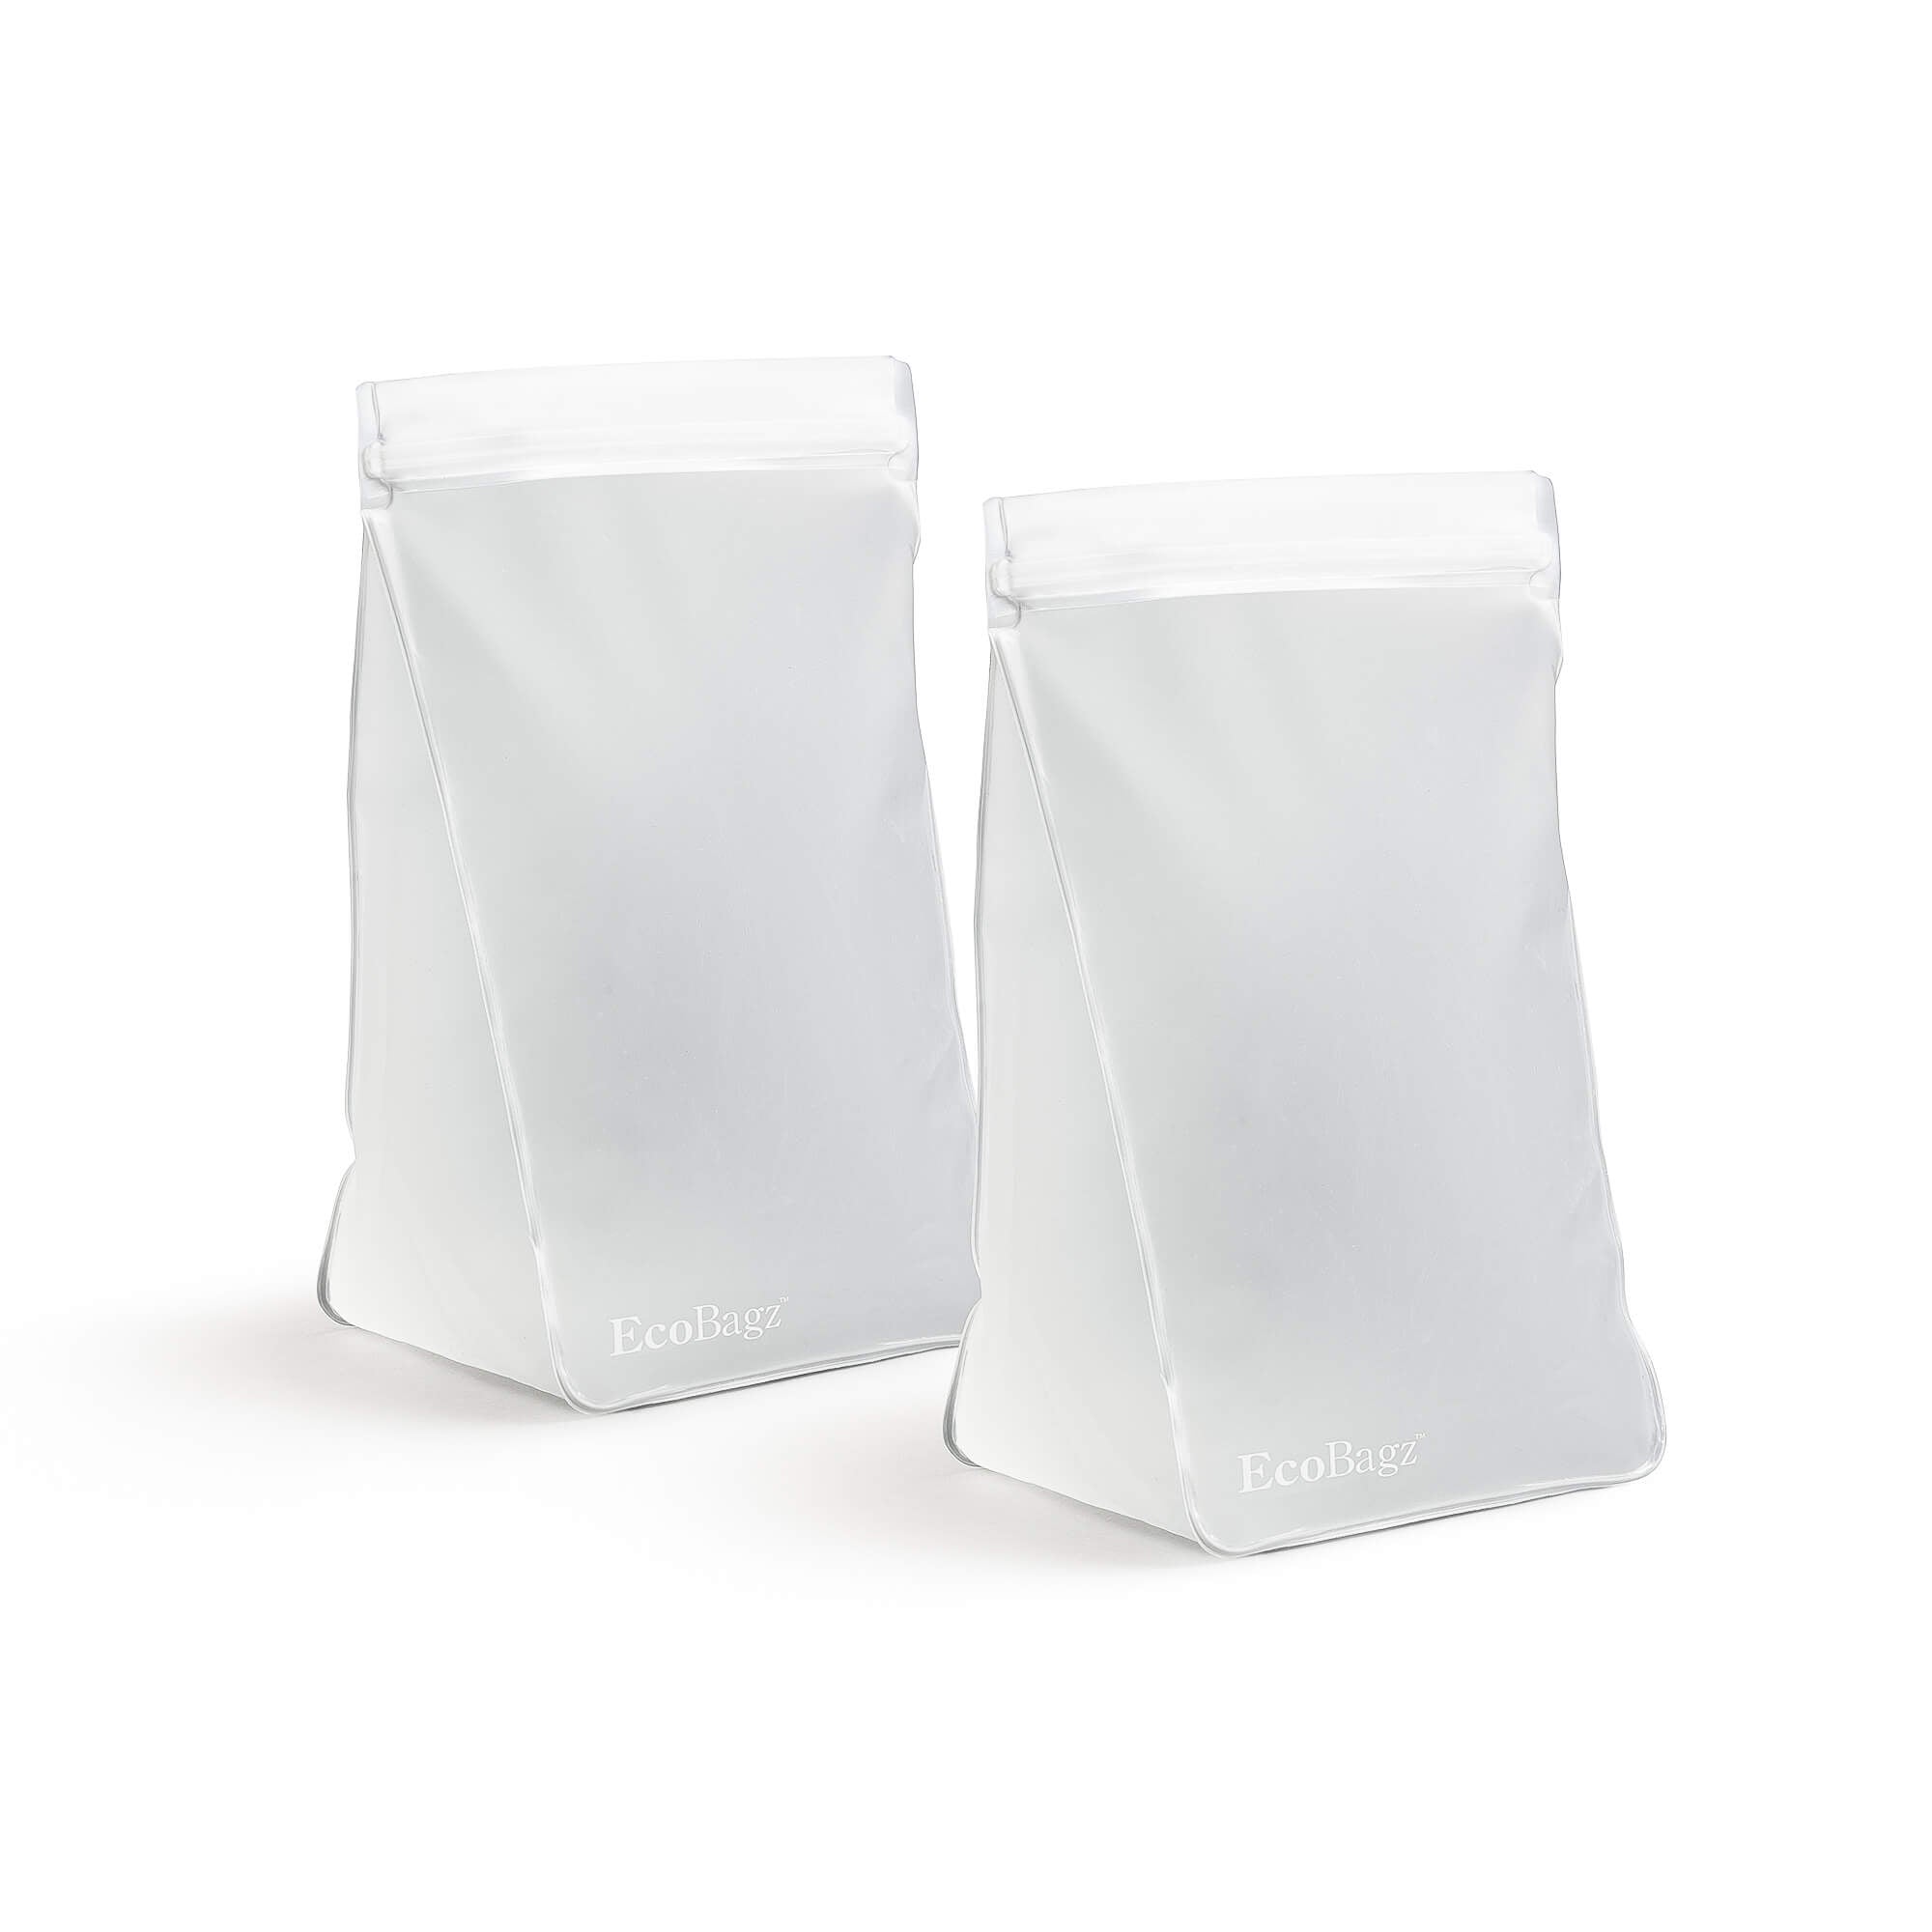 Zeal EcoBagz eco-friendly reusable bags